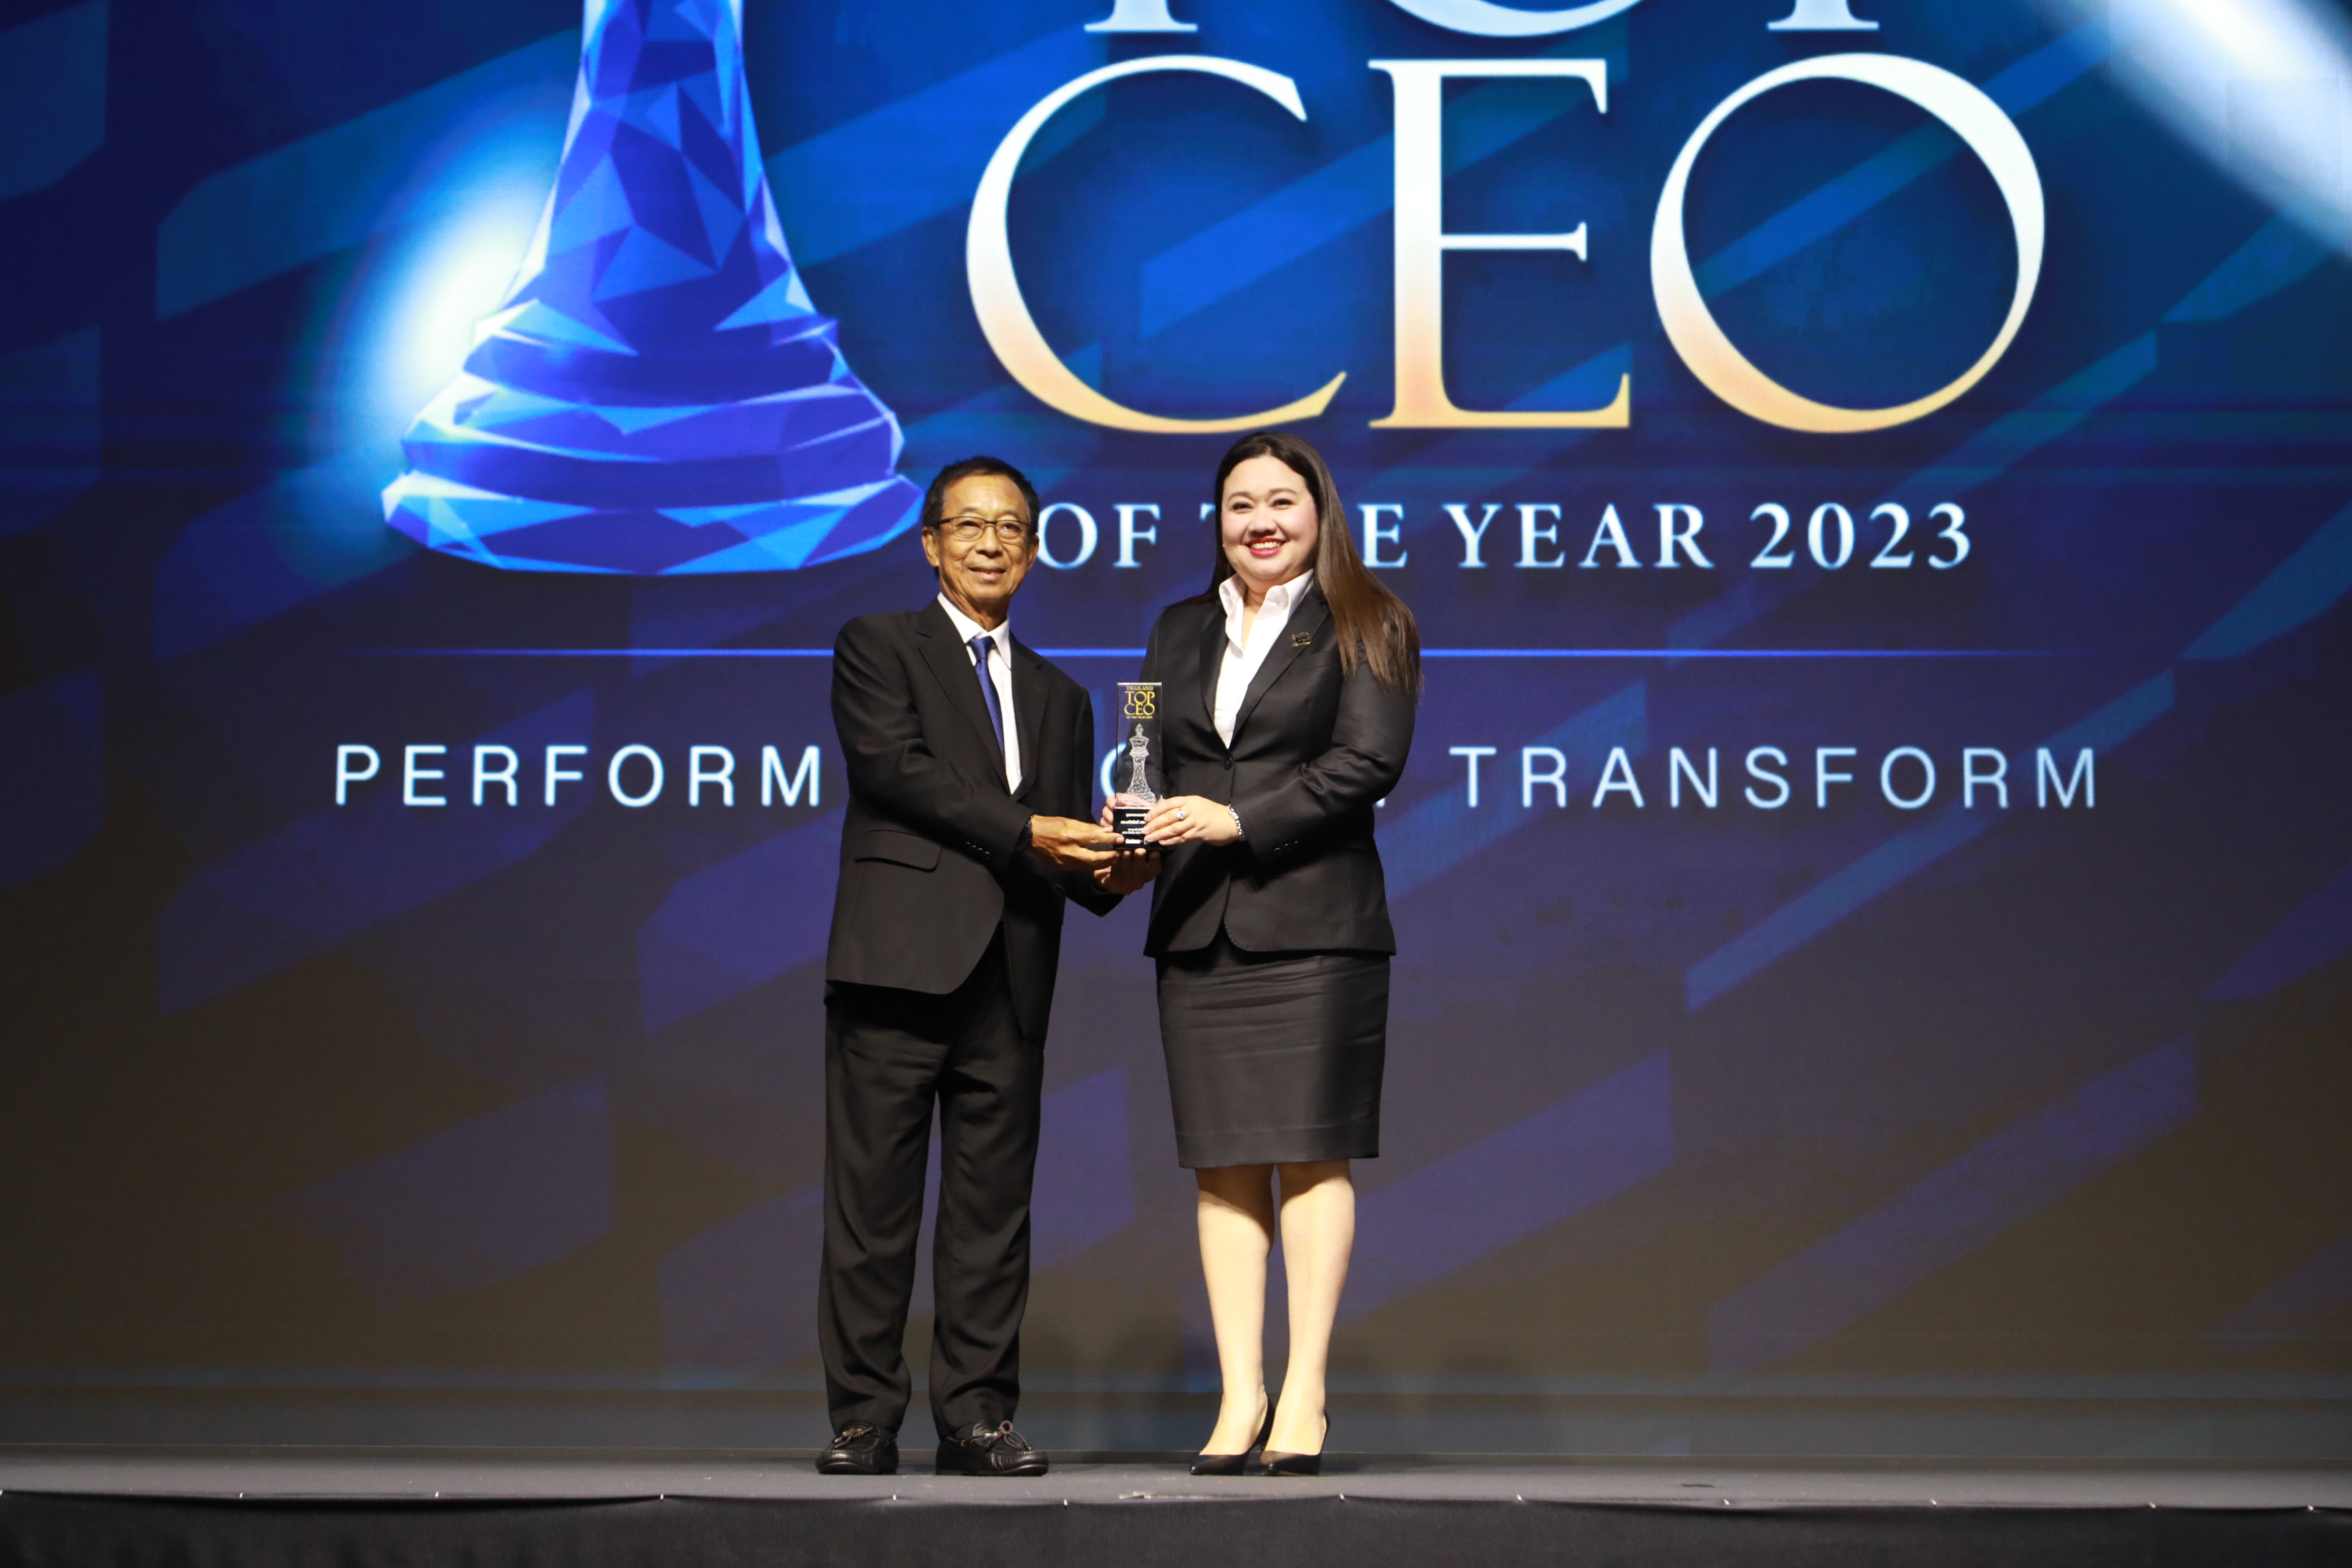 CEO หญิง TQMalpha คว้ารางวัล “THAILAND TOP CEO OF THE YEAR 2023” ตอกย้ำความเป็นสุดยอดผู้นำองค์กรแห่งปี